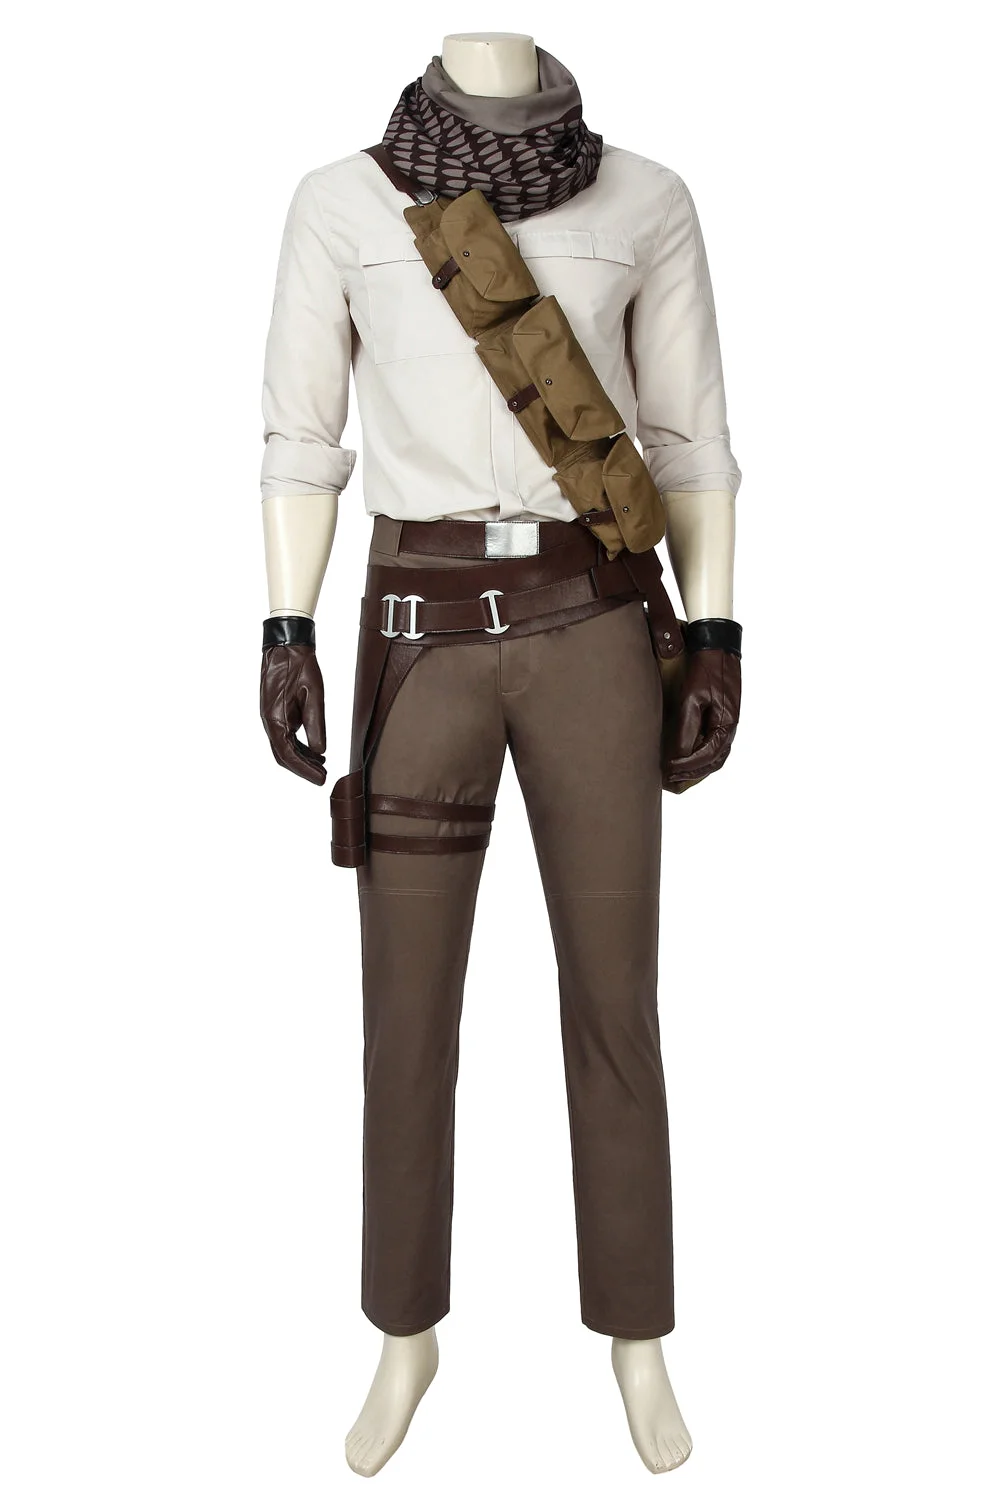 Star Wars9 The Rise of Skywalker Poe Dameron Cosplay Costume